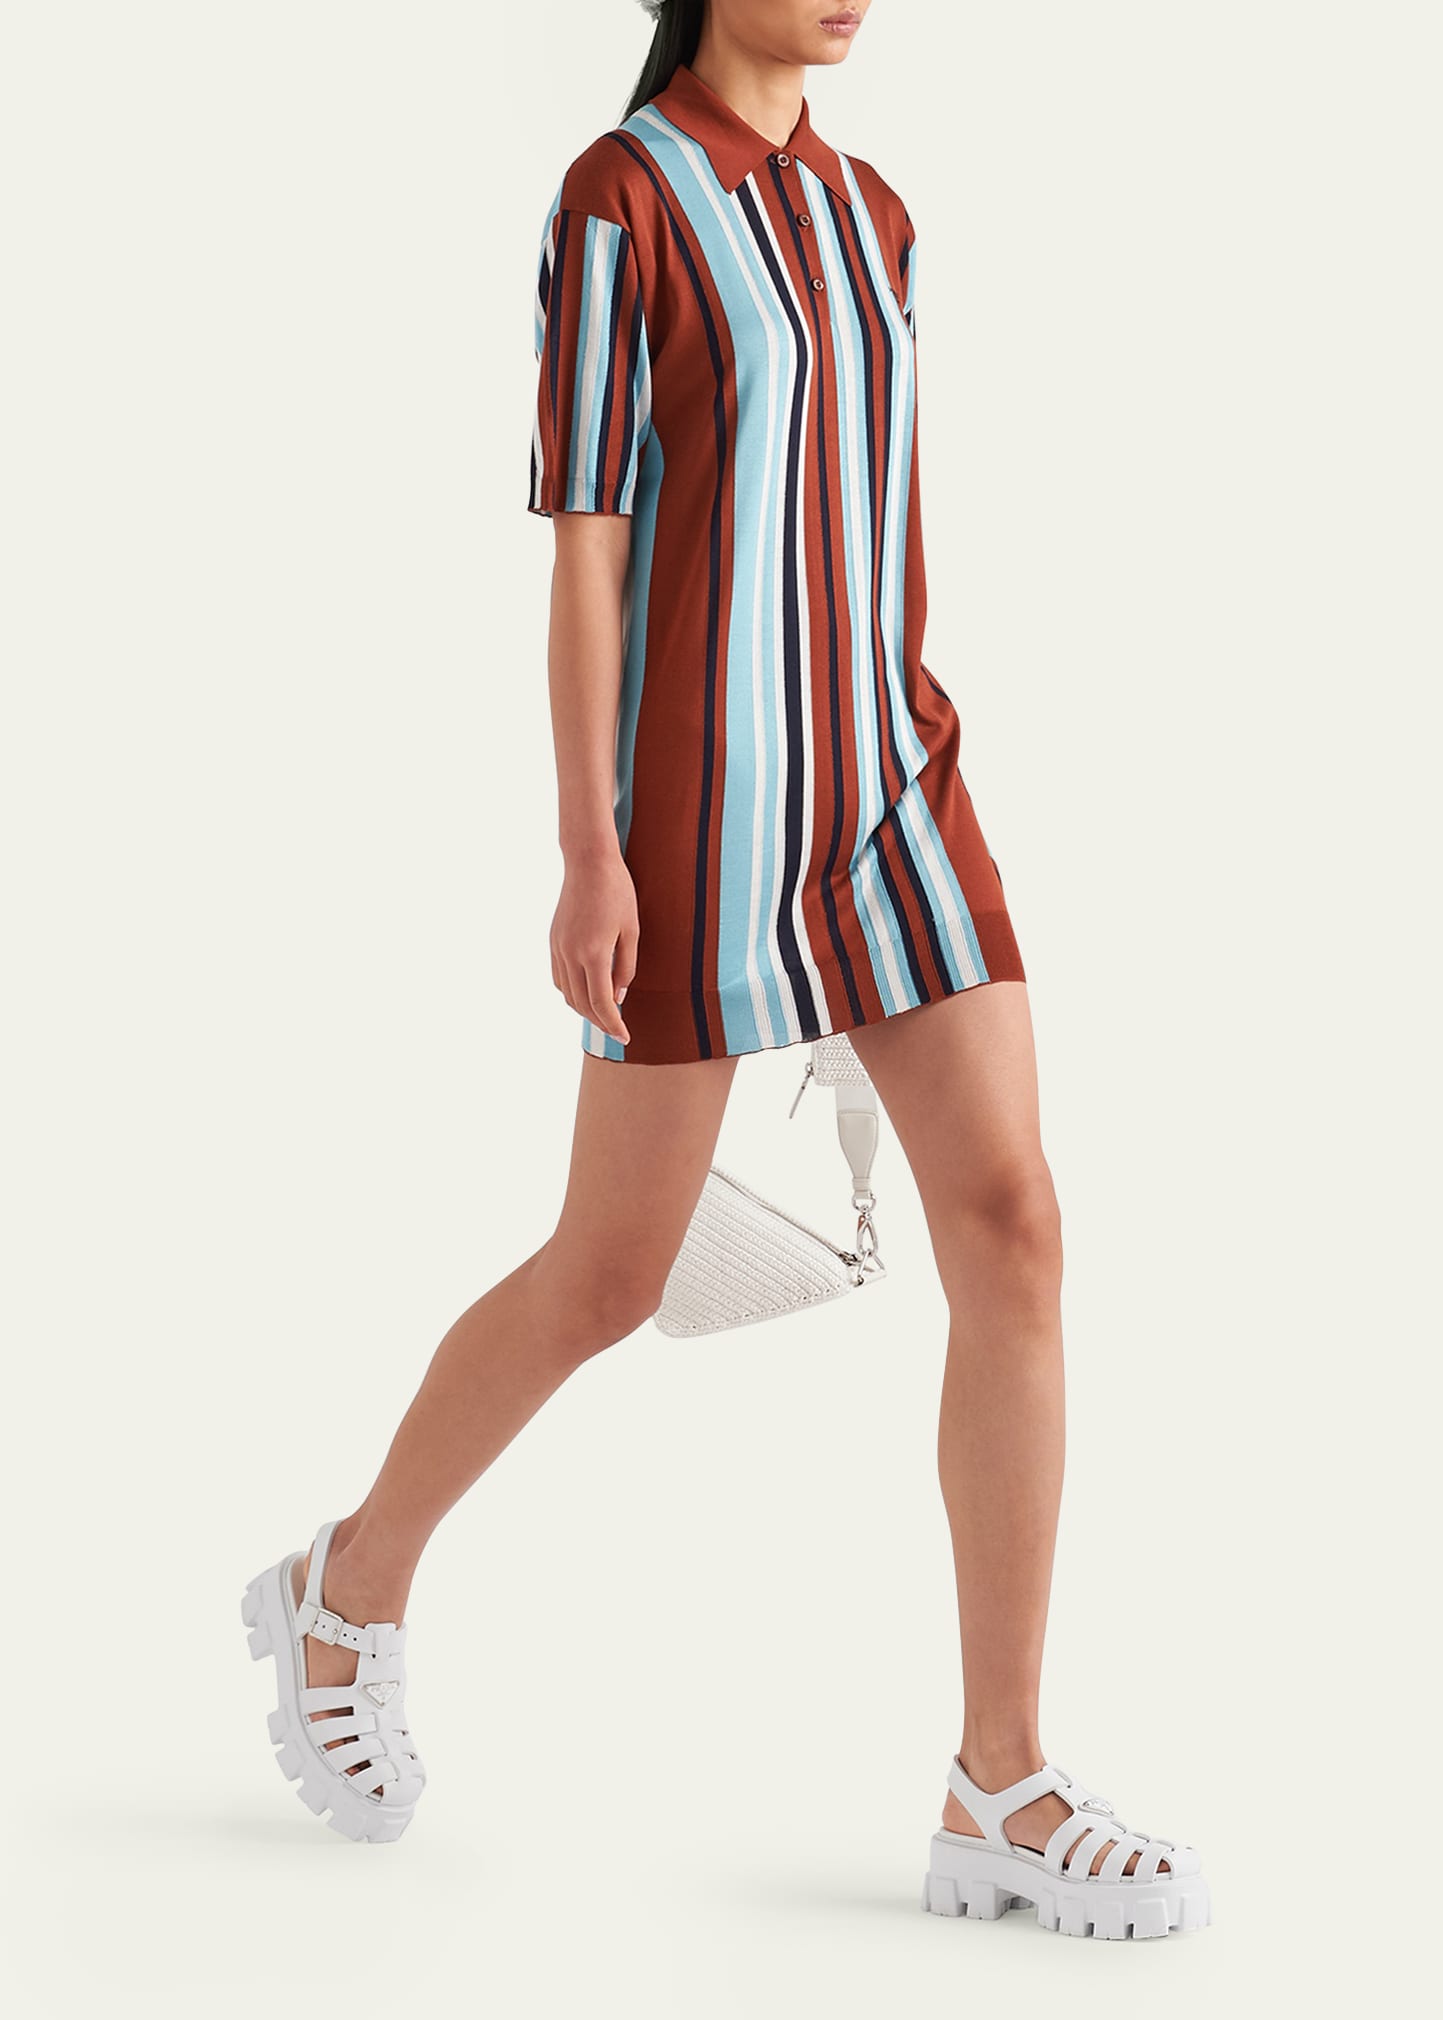 Striped Polo Knit Dress